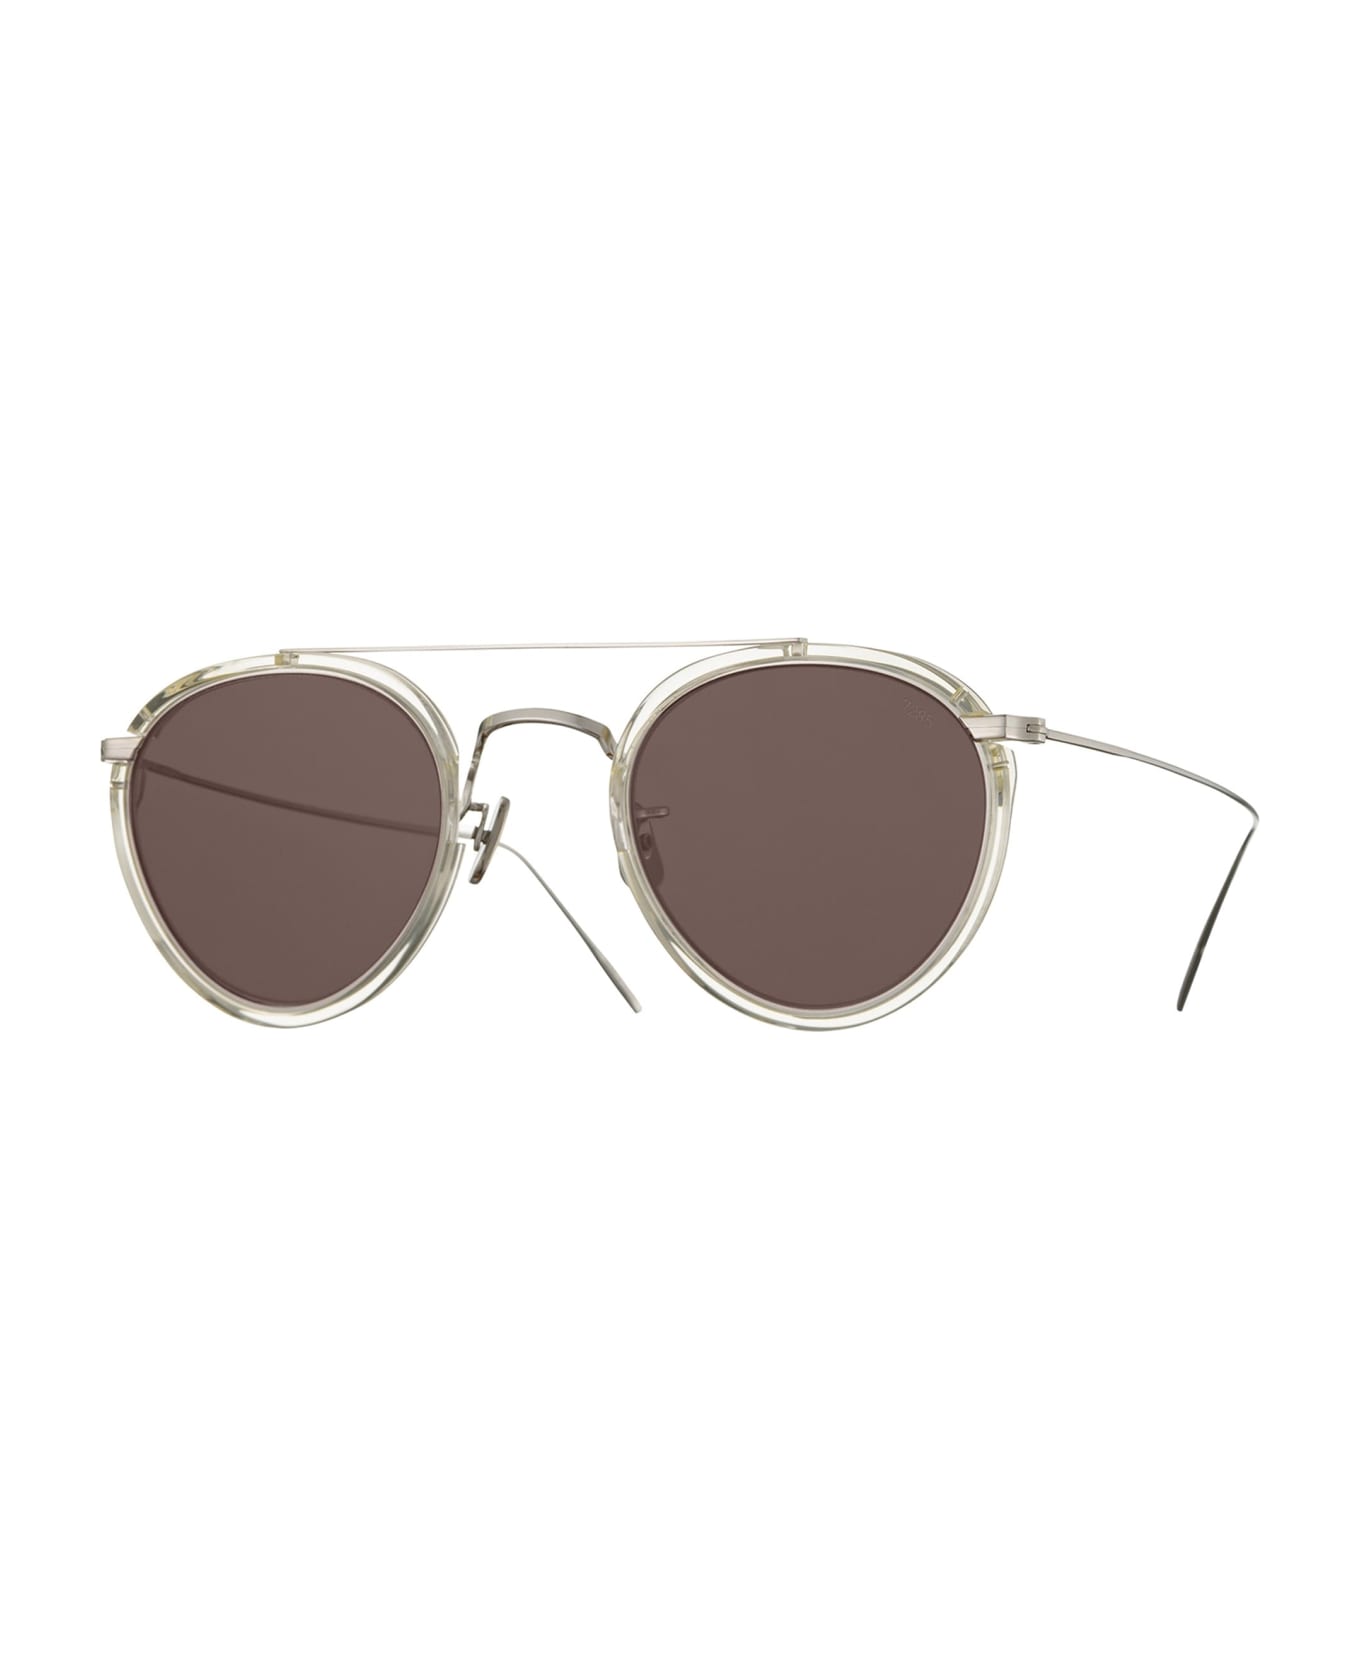 Eyevan 7285 762 - Silver Sunglasses - Silver